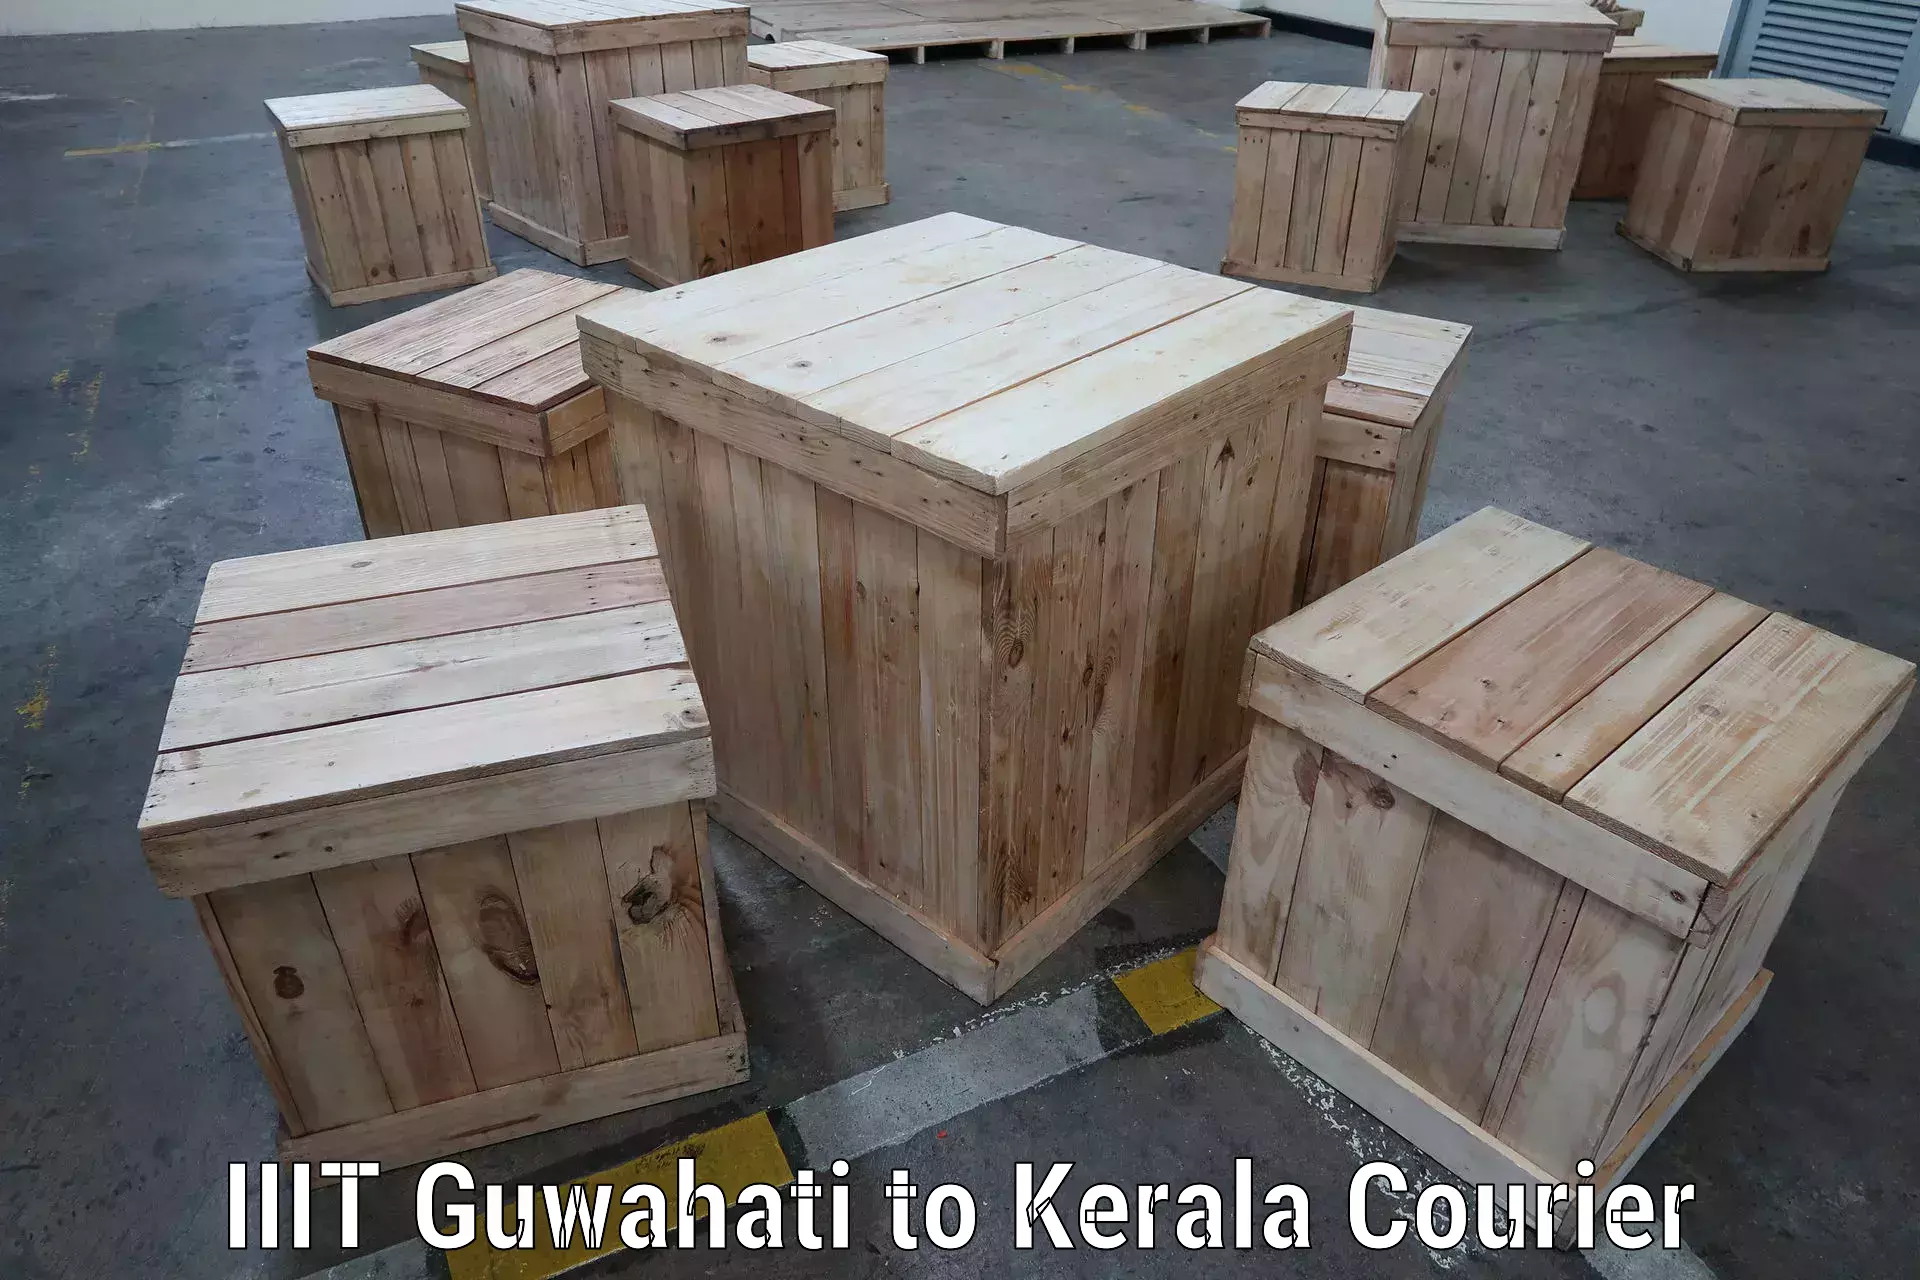 Global courier networks IIIT Guwahati to Kerala